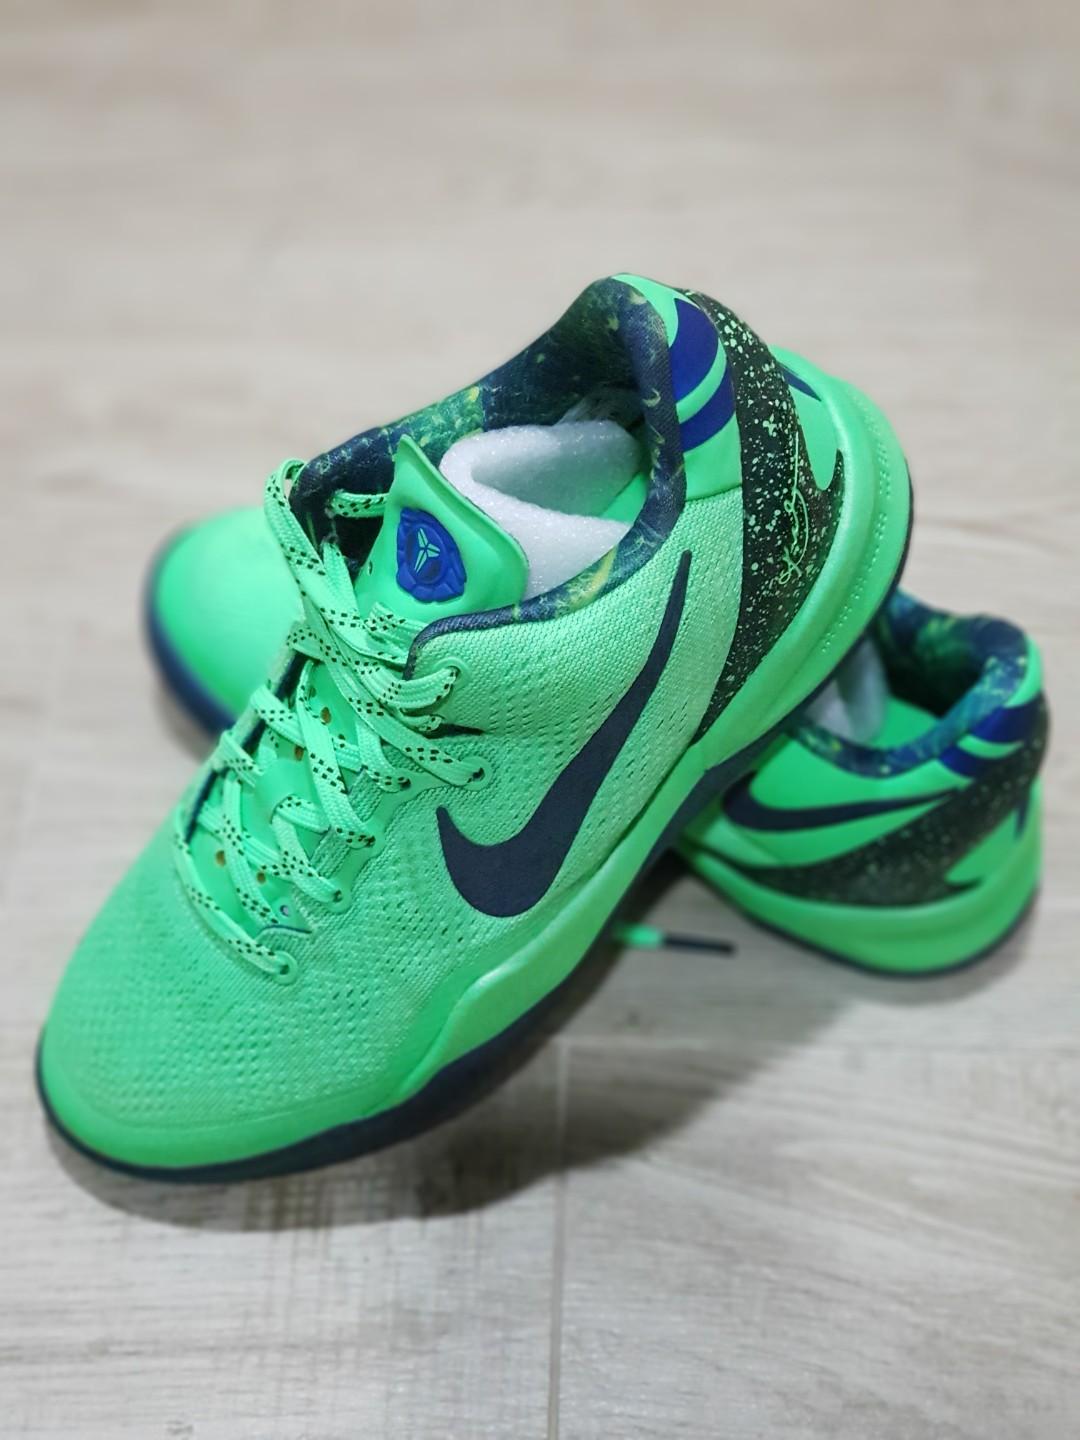 kobe neon green shoes